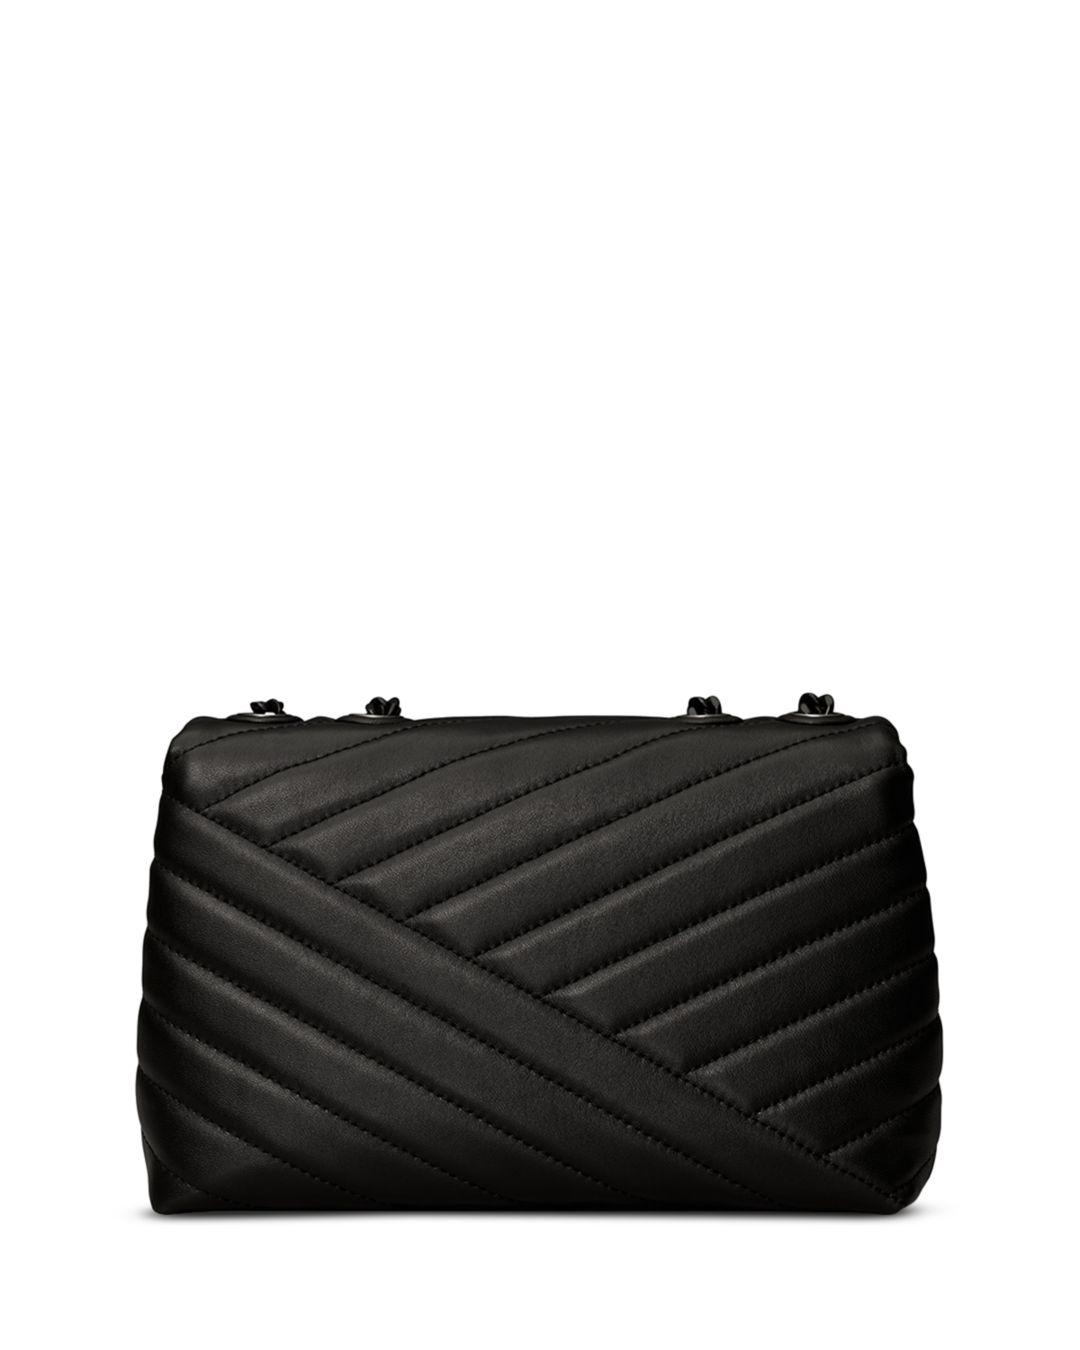 Tory Burch Kira Chevron Small Convertible Leather Shoulder Bag in Black